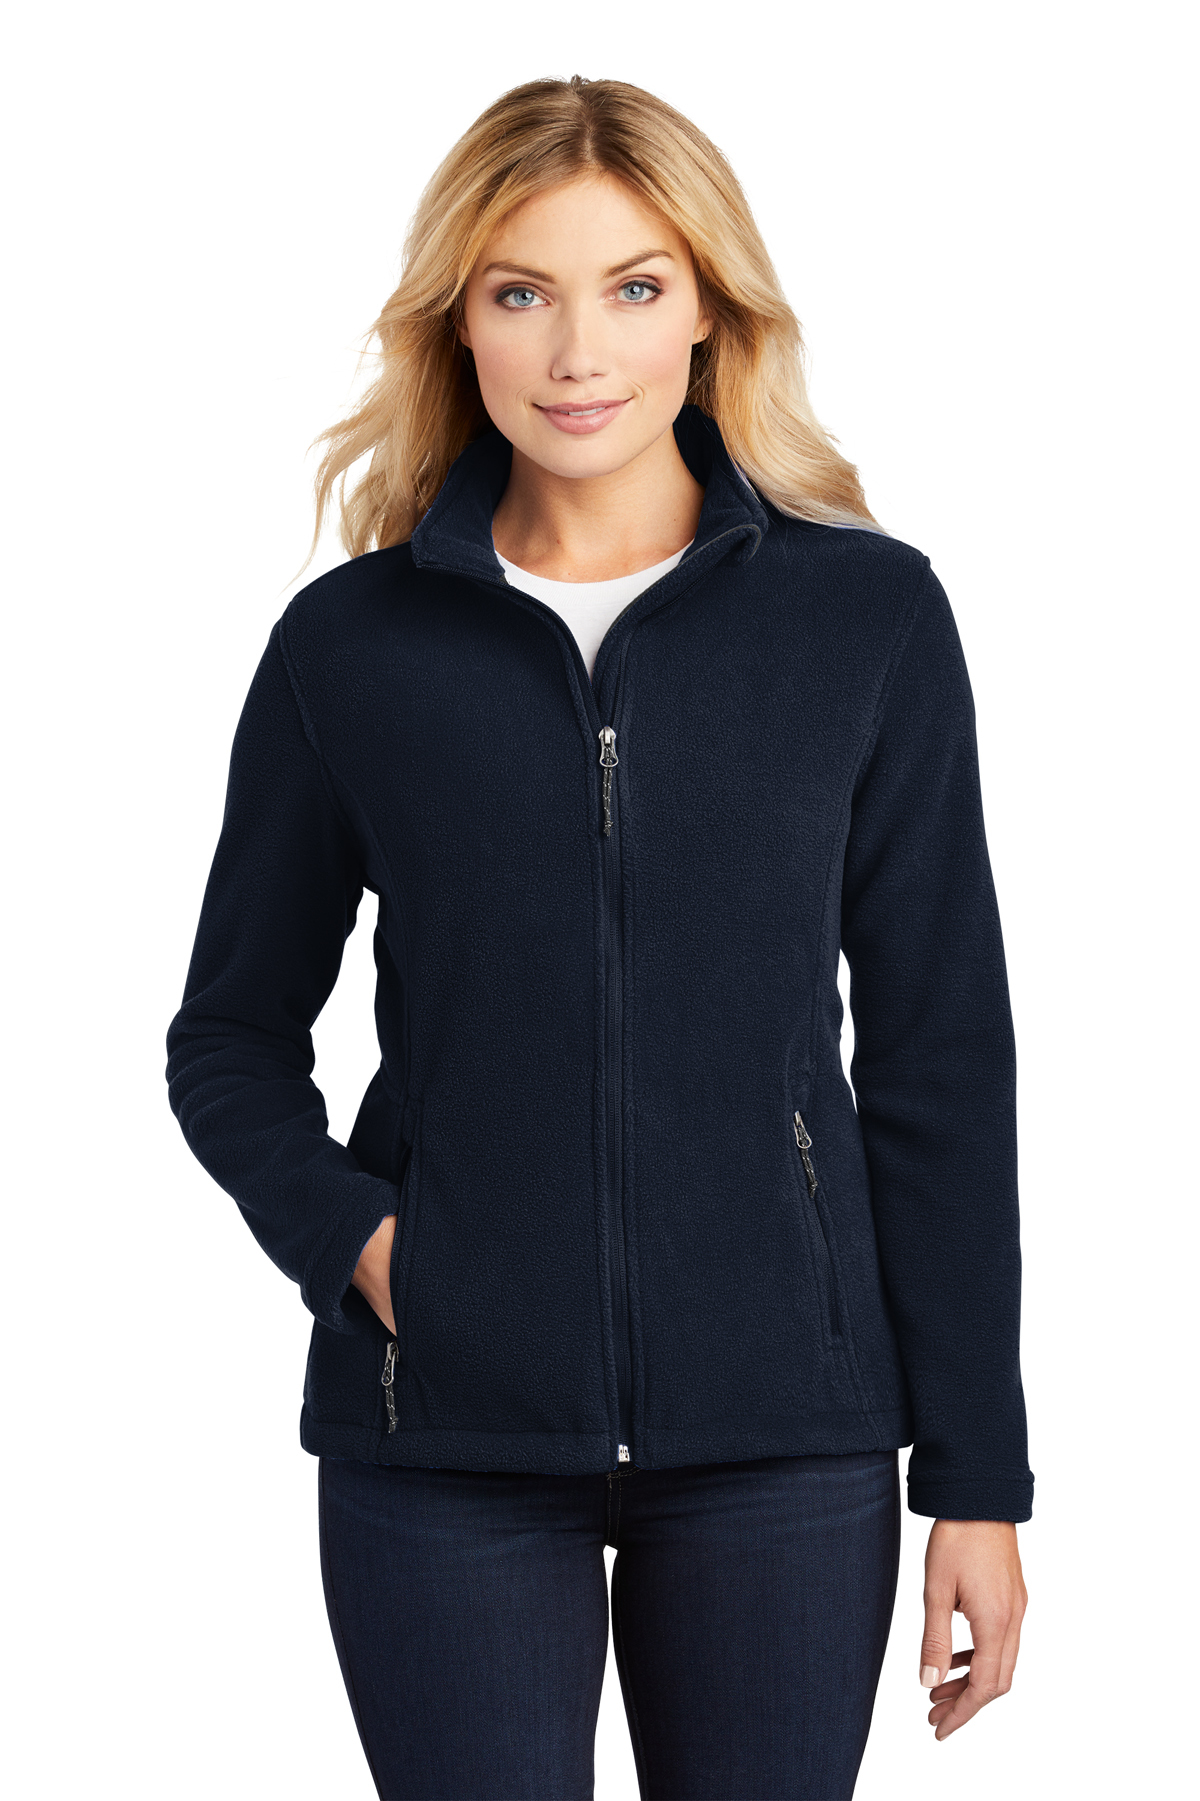 Port Authority Ladies Value Fleece Jacket | Product | Company Casuals